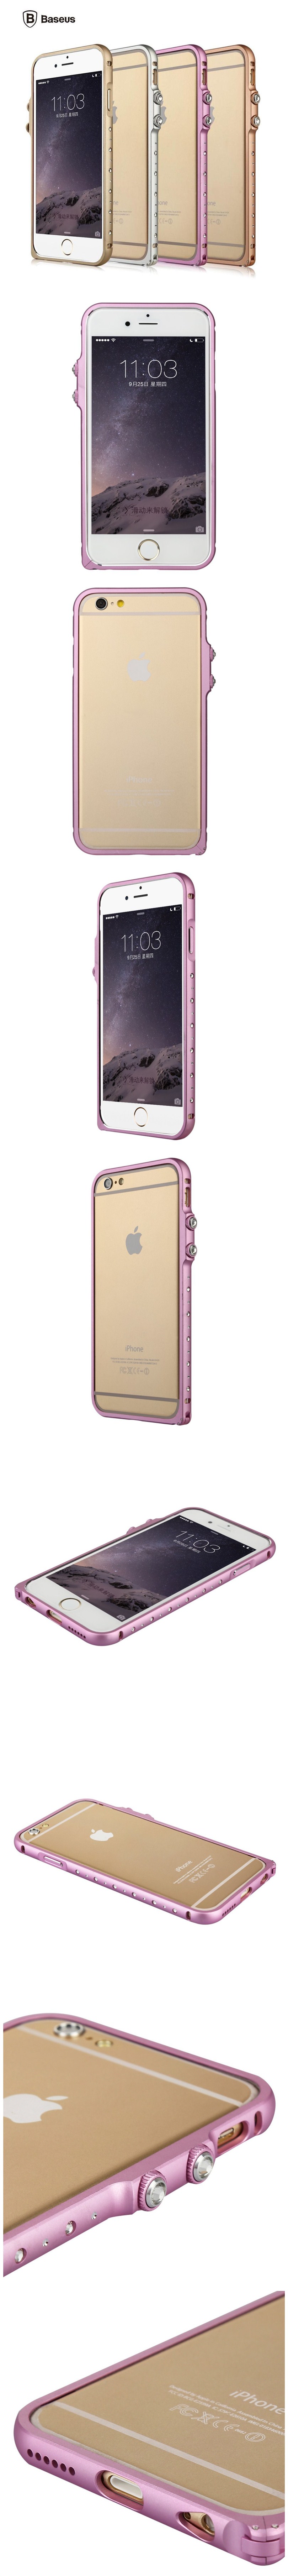 BASEUS Diamond Crystal Rhinestone Bling Aluminum Metal Frame Bumper Case For Apple iPhone 6 6 Plus